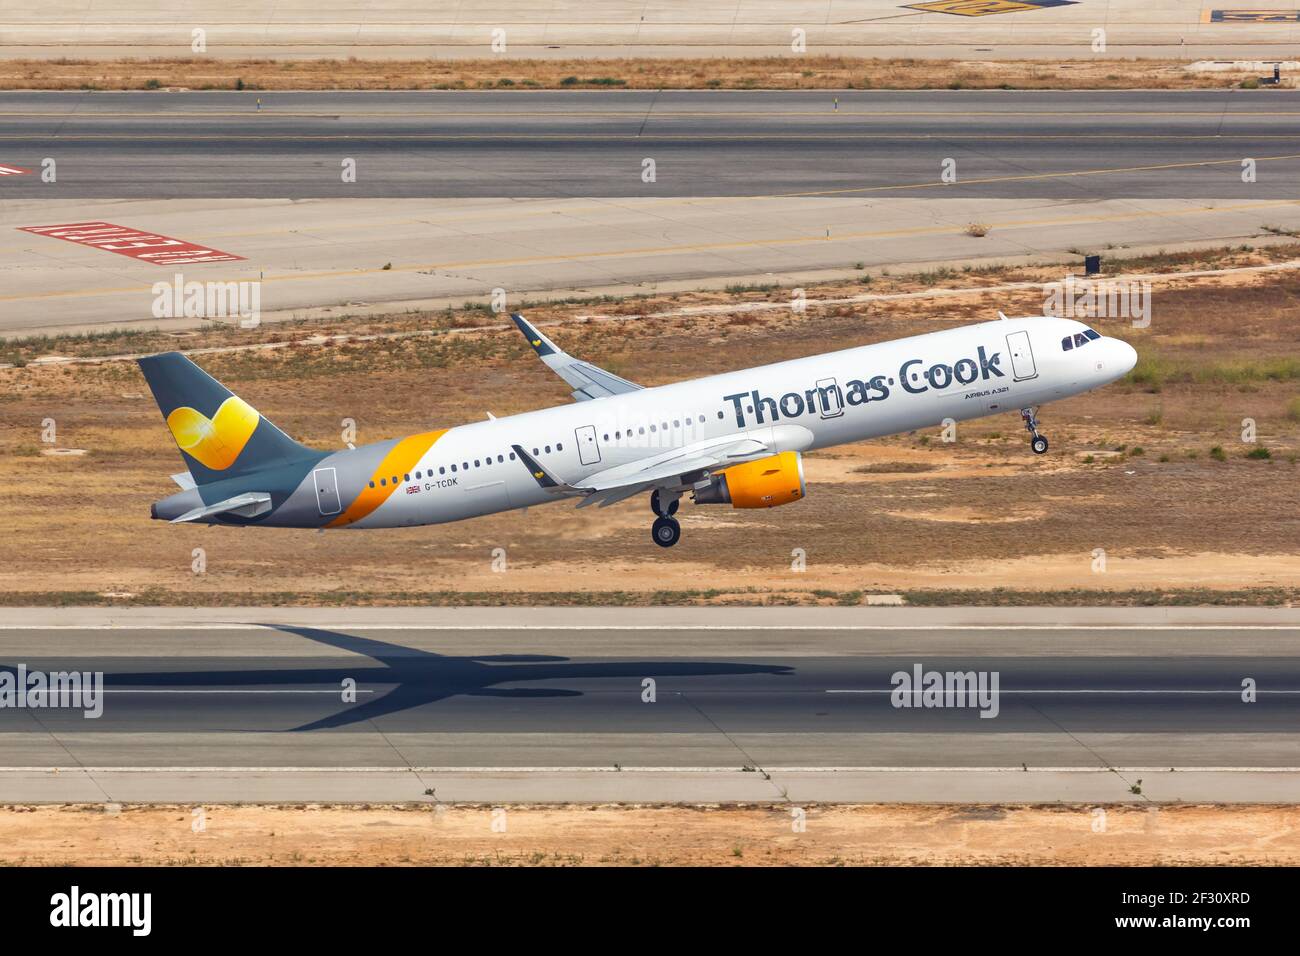 Palma de Mallorca, Spanien - 21. Juli 2018: Luftaufnahme eines Thomas Cook Airbus A321 Flugzeugs am Flughafen Palma de Mallorca in Spanien. Stockfoto